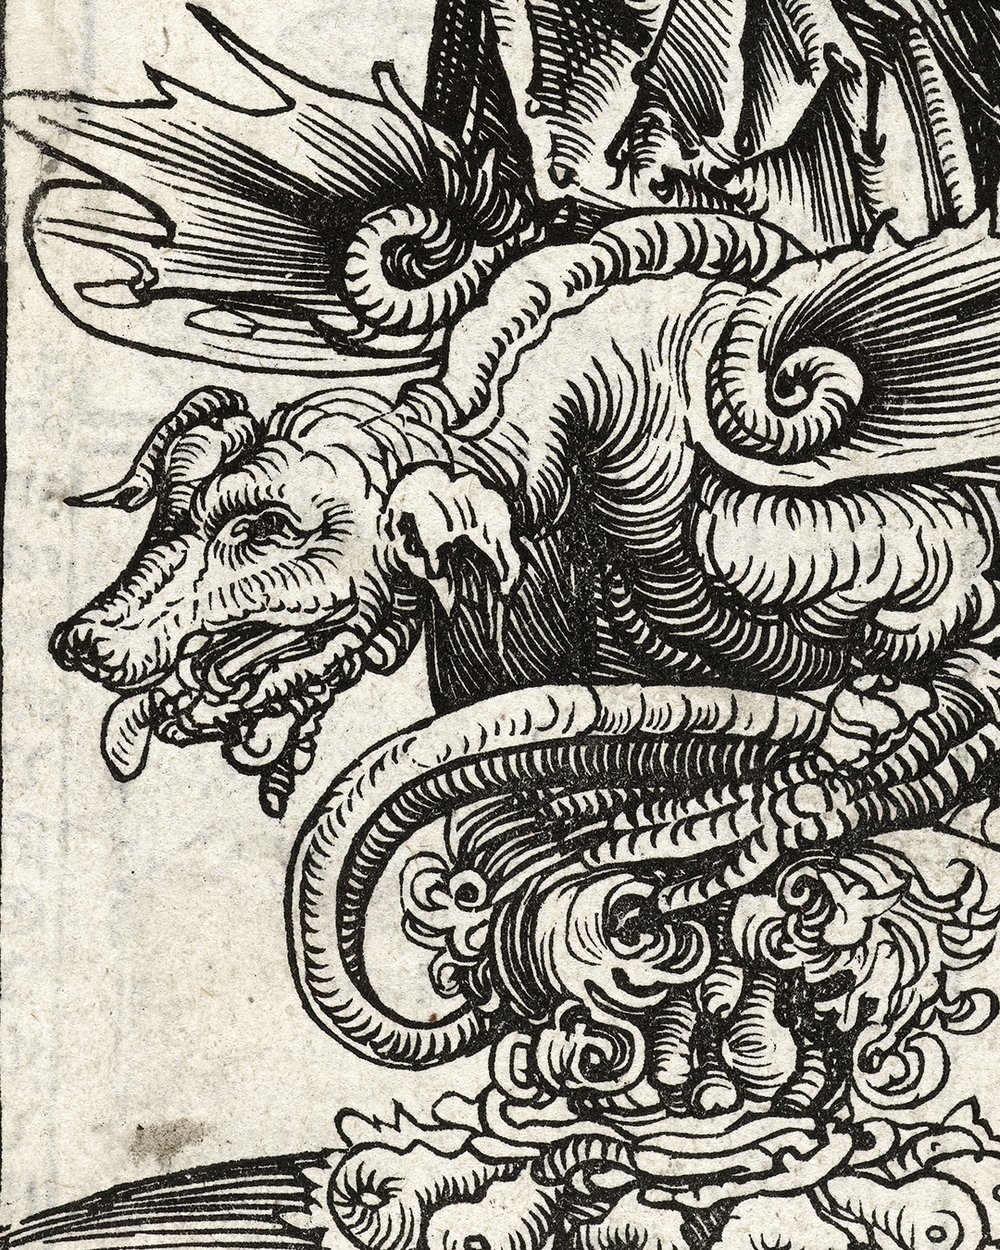 ''Sculpture of Saint Margaret and dragon'' (1509 - 1549)